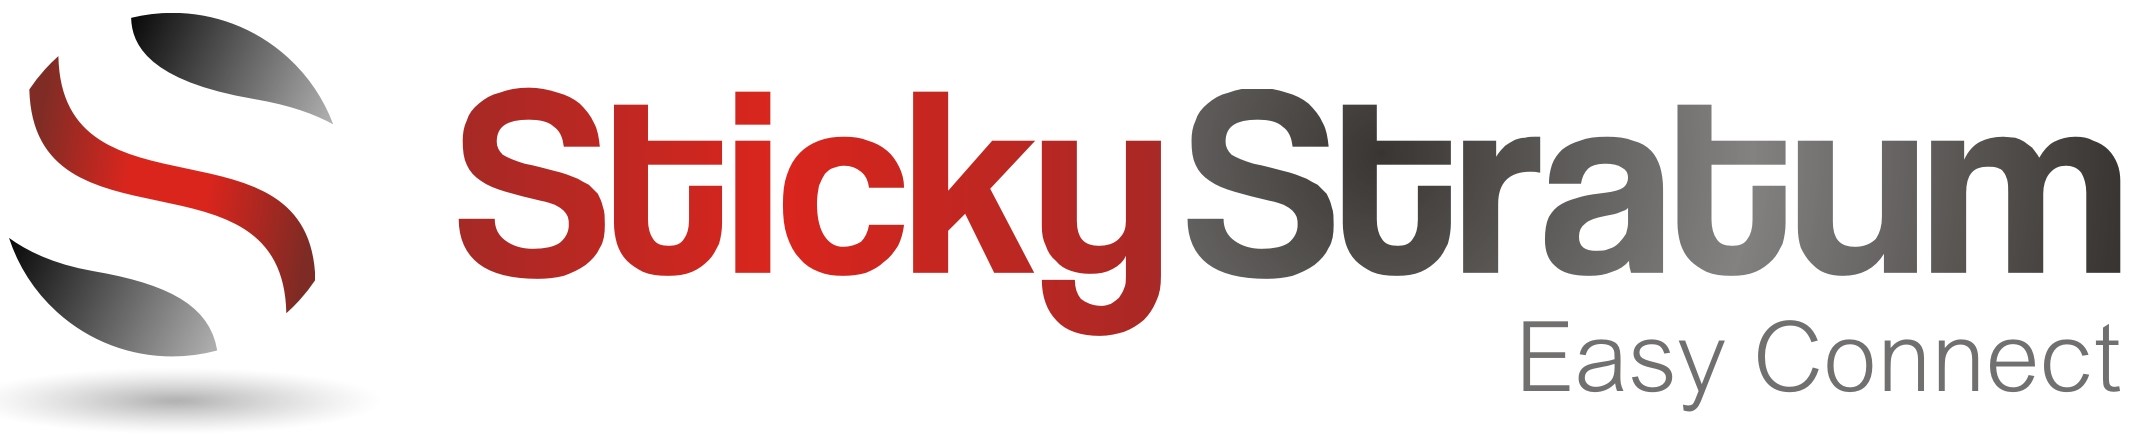 StickyStratum.com